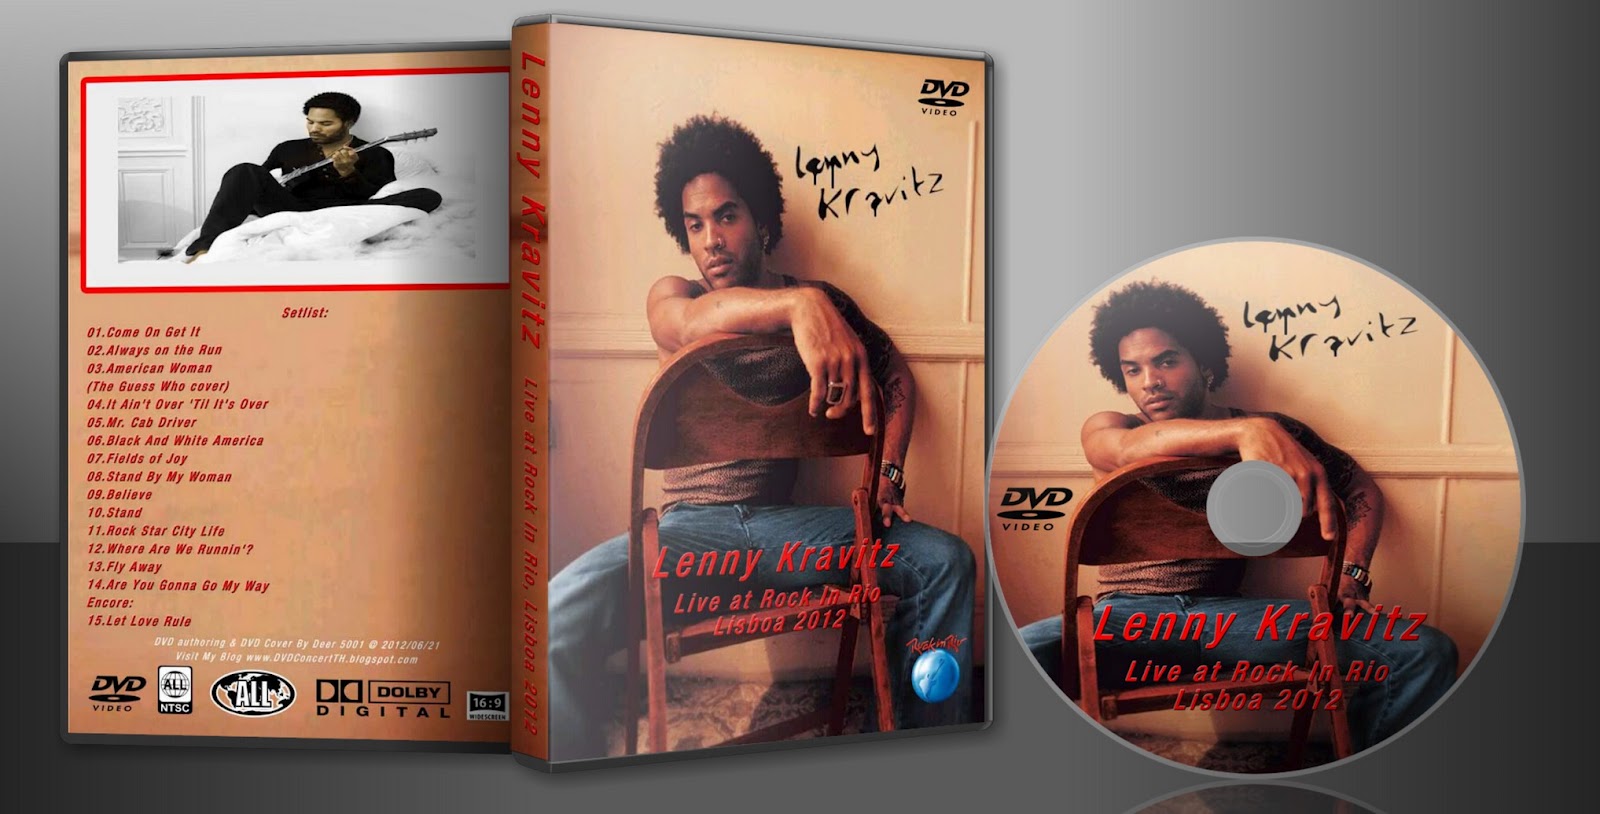 http://4.bp.blogspot.com/-t3gtH19MLfk/T-akV3iNV2I/AAAAAAAAGY8/Pgqcp70Qo98/s1600/DVD+Cover+For+Show+-+Lenny+Kravitz+-+2012+-+Rock+In+Rio+-+Lisbon.jpg